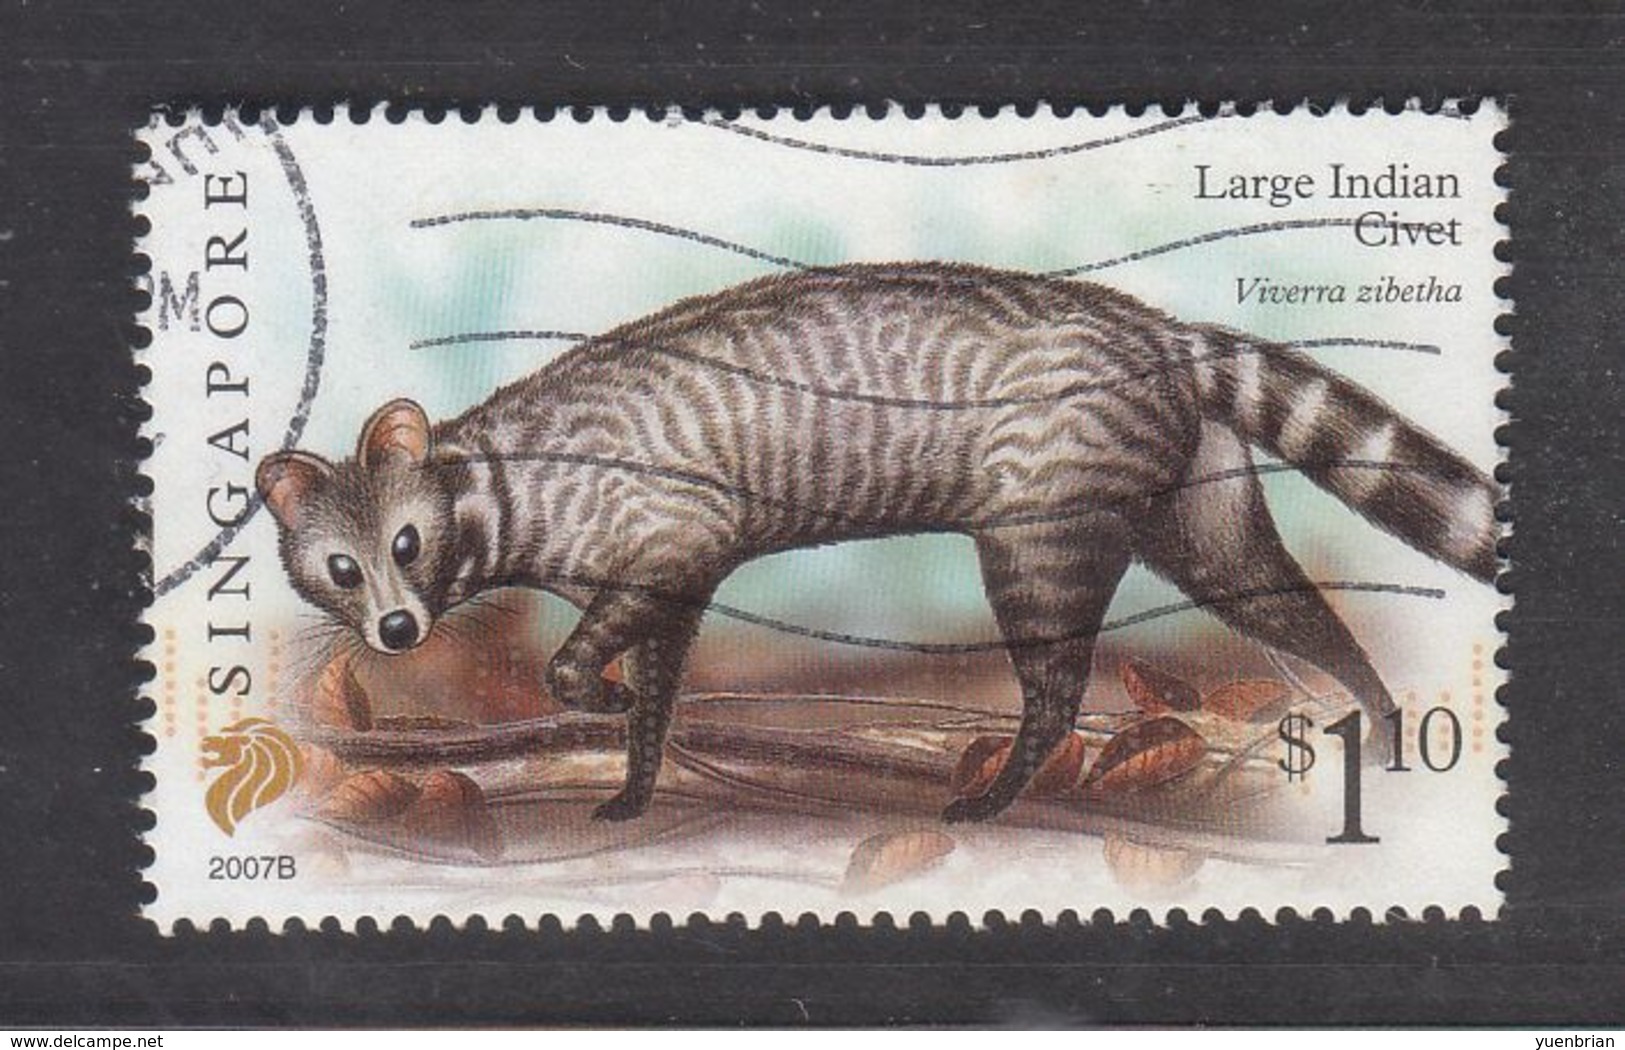 Singapore, 2007 Definitive Stamp Series, $1.10 Large Indian Civet "2007B", Fine Used - Singapur (1959-...)